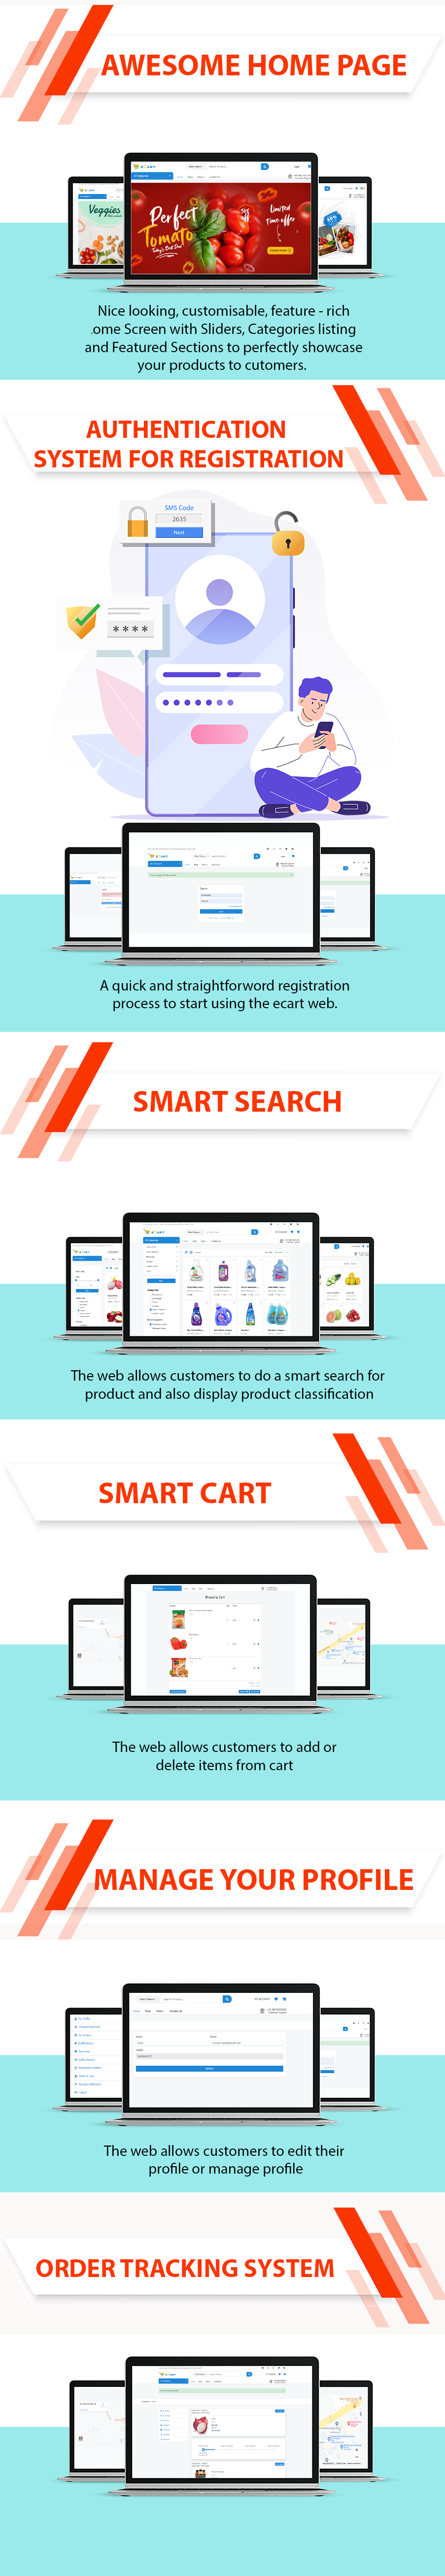 eCart Web - Ecommerce/Store Full Website - 9